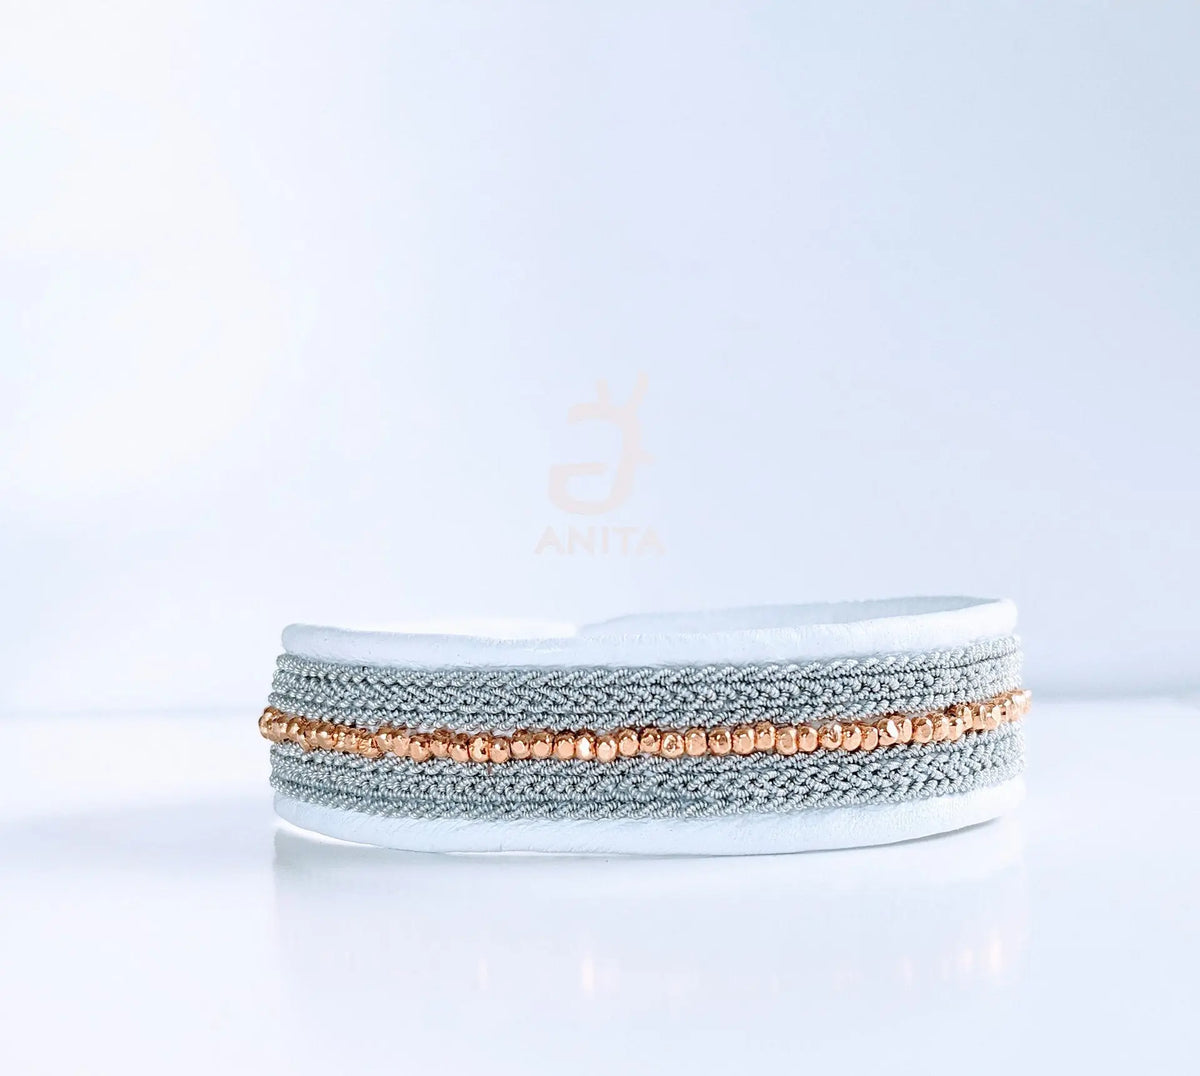 Handmade Leather Bracelet - White and Gold - Squash Blossom Vail